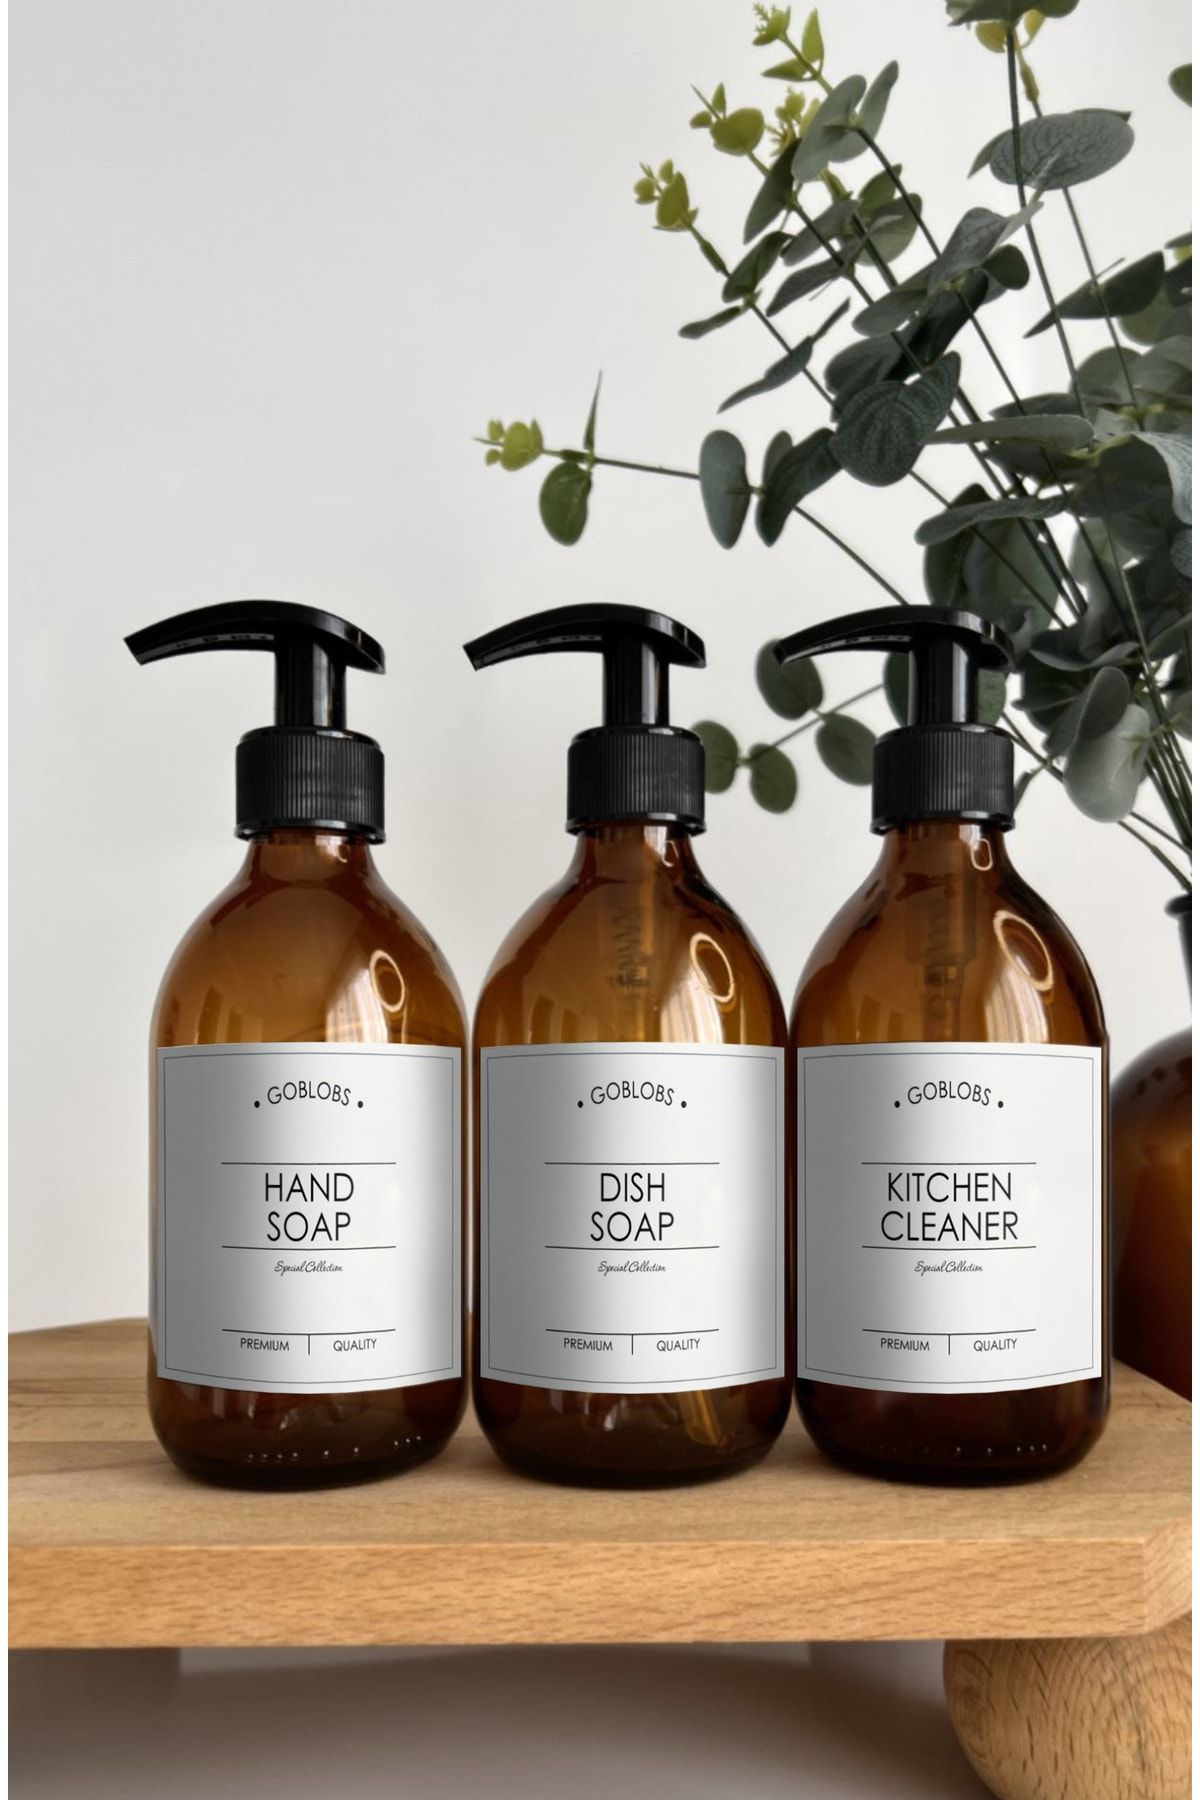 GO BLOBS 3'lü Set 300ml Amber Şişe Hand Soap & Dısh Soap & Kitchen Cleaner Beyaz